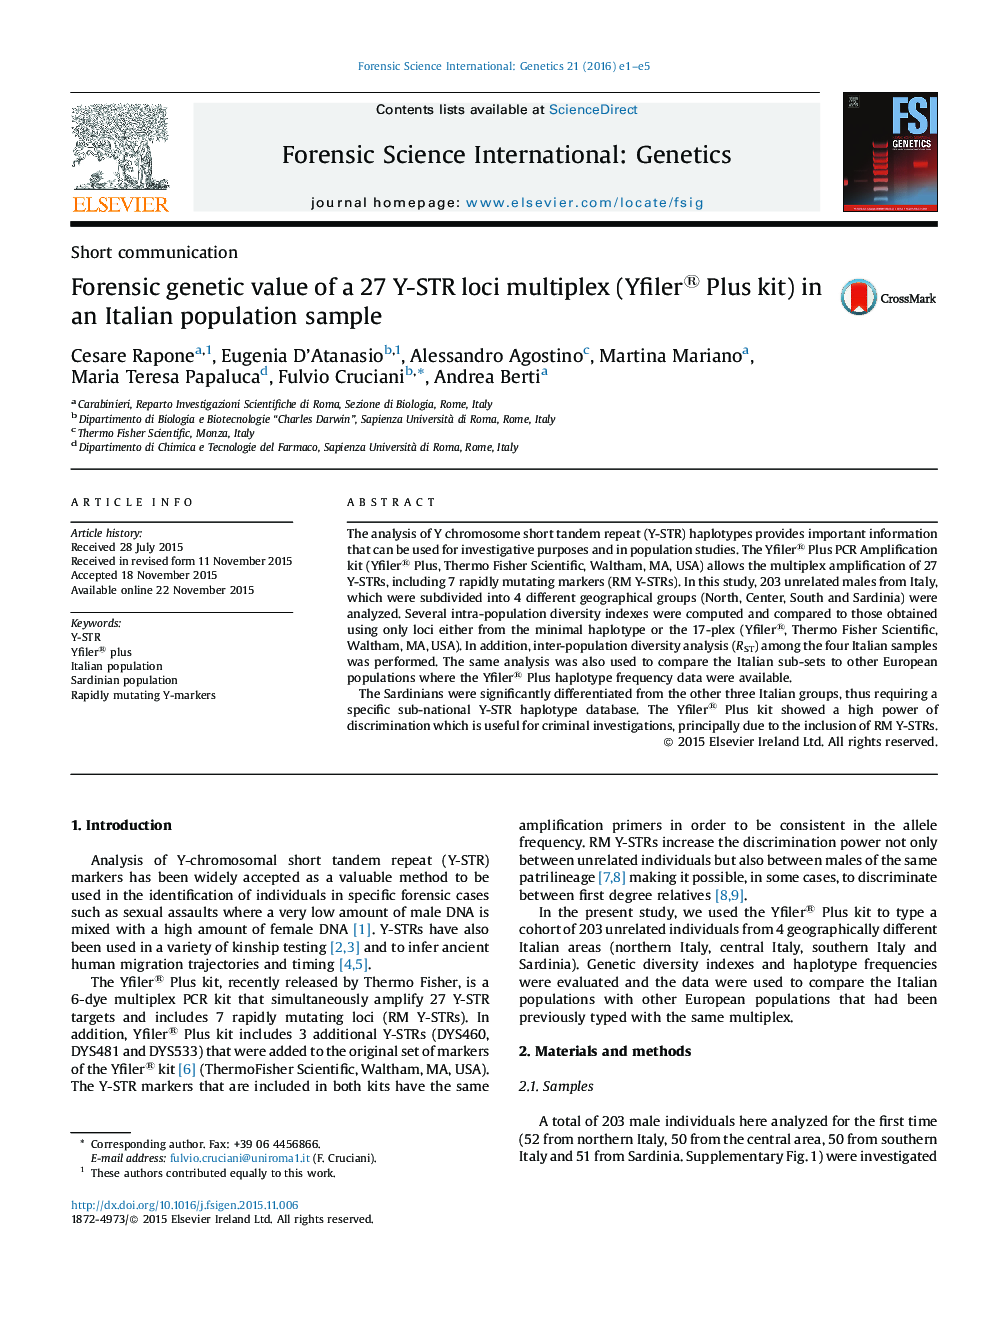 Forensic genetic value of a 27 Y-STR loci multiplex (Yfiler® Plus kit) in an Italian population sample